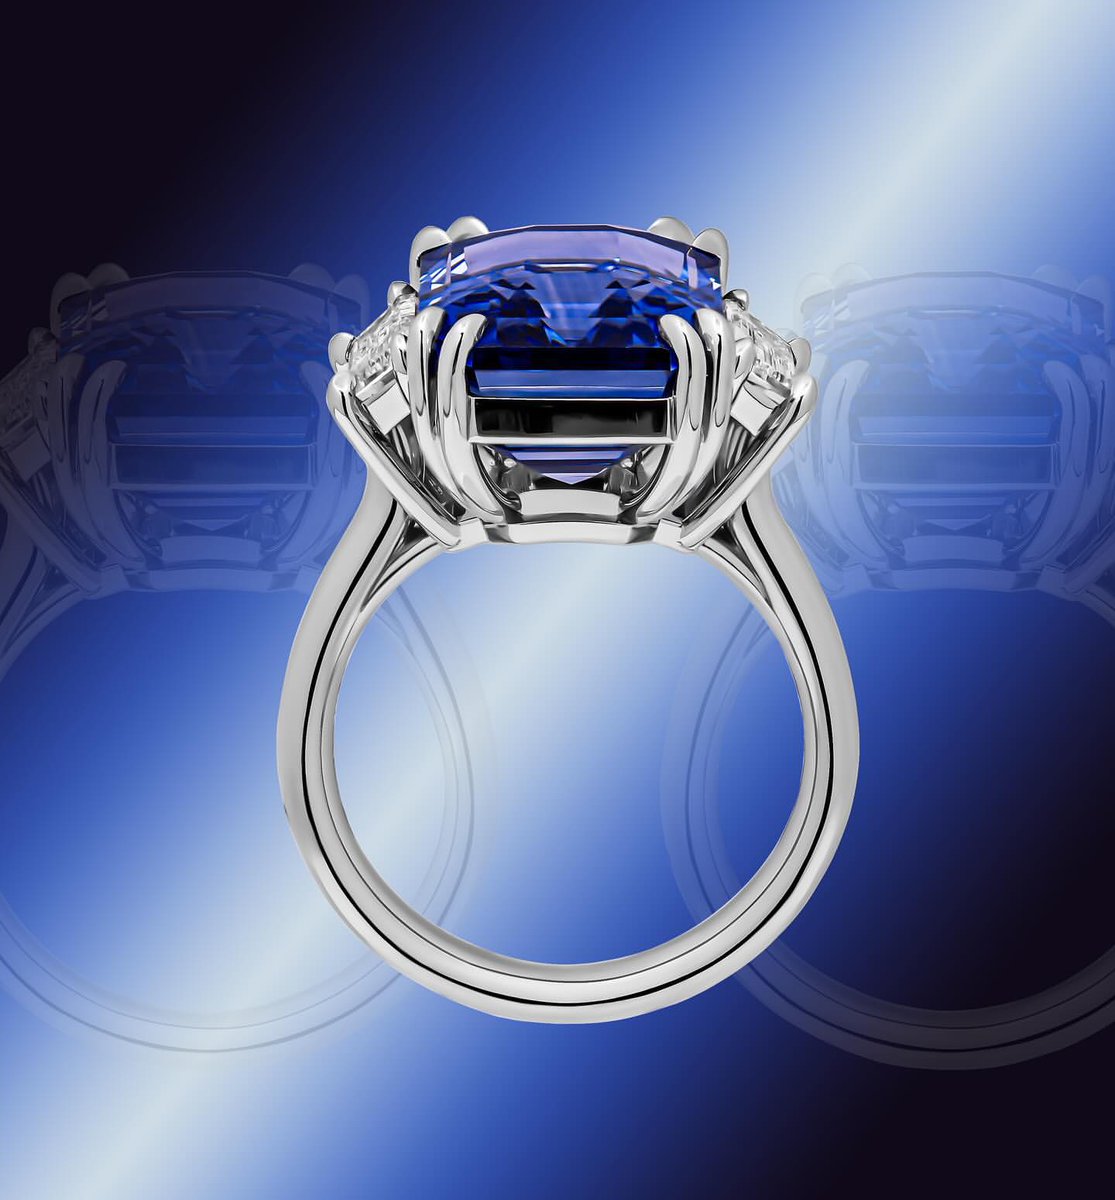 Introducing our stunning new ring, crafted to perfection! 💍✨

#diamond #diamondring #luxurydiamonds #diamondjewelry